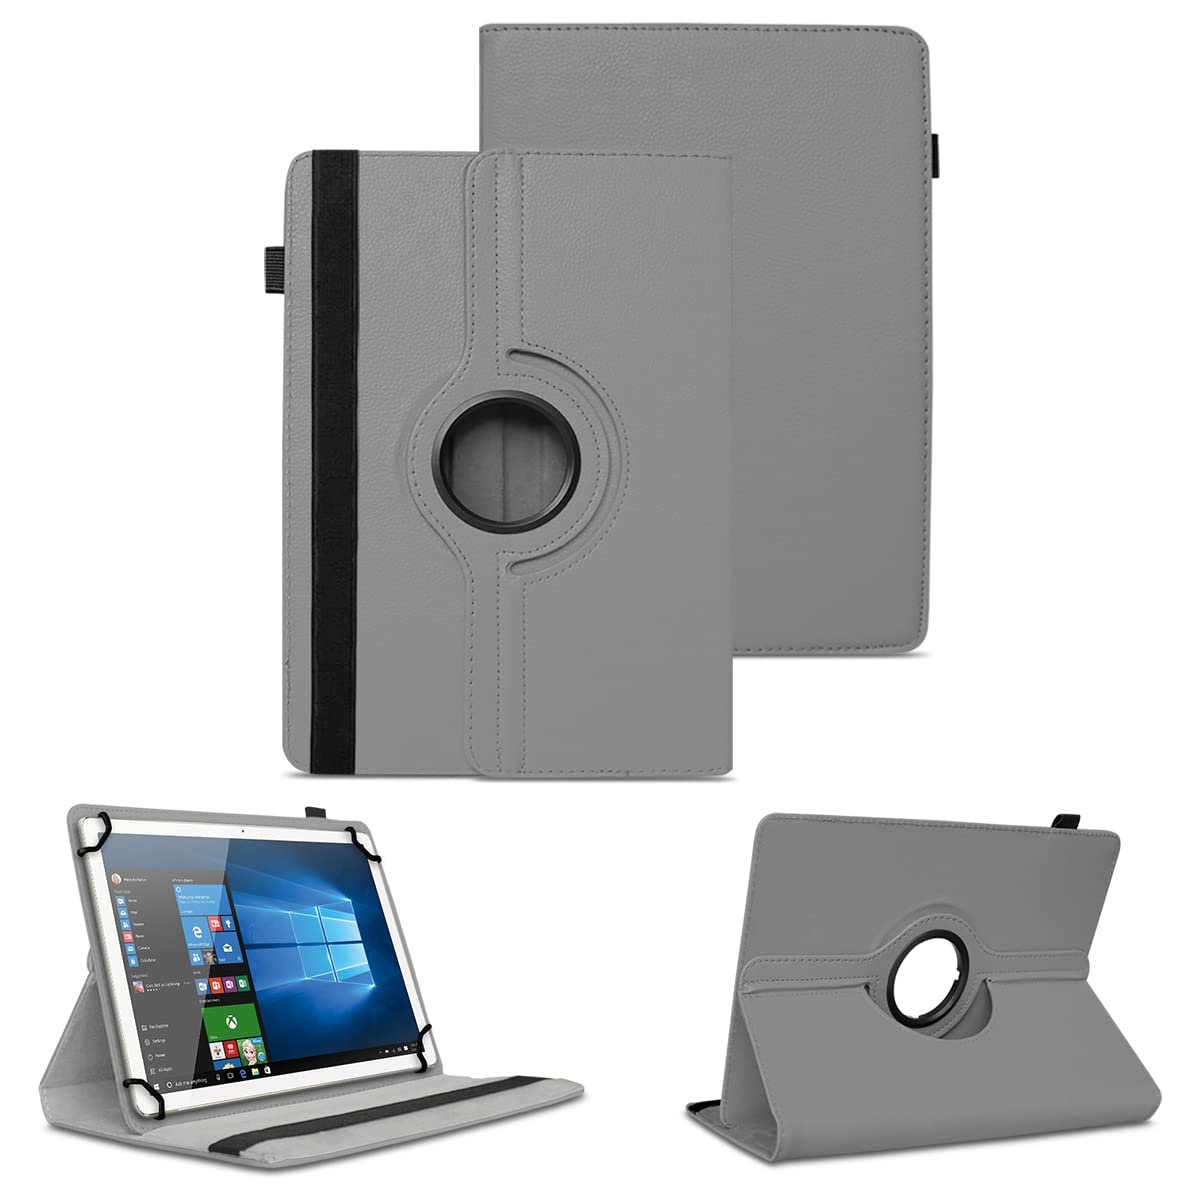 NAUC Tablet Hülle kompatibel mit Acepad A14 A130 A145 Tasche Schutzhülle Cover 360° Drehbar Schutz Case Ständer, Farben:Grau